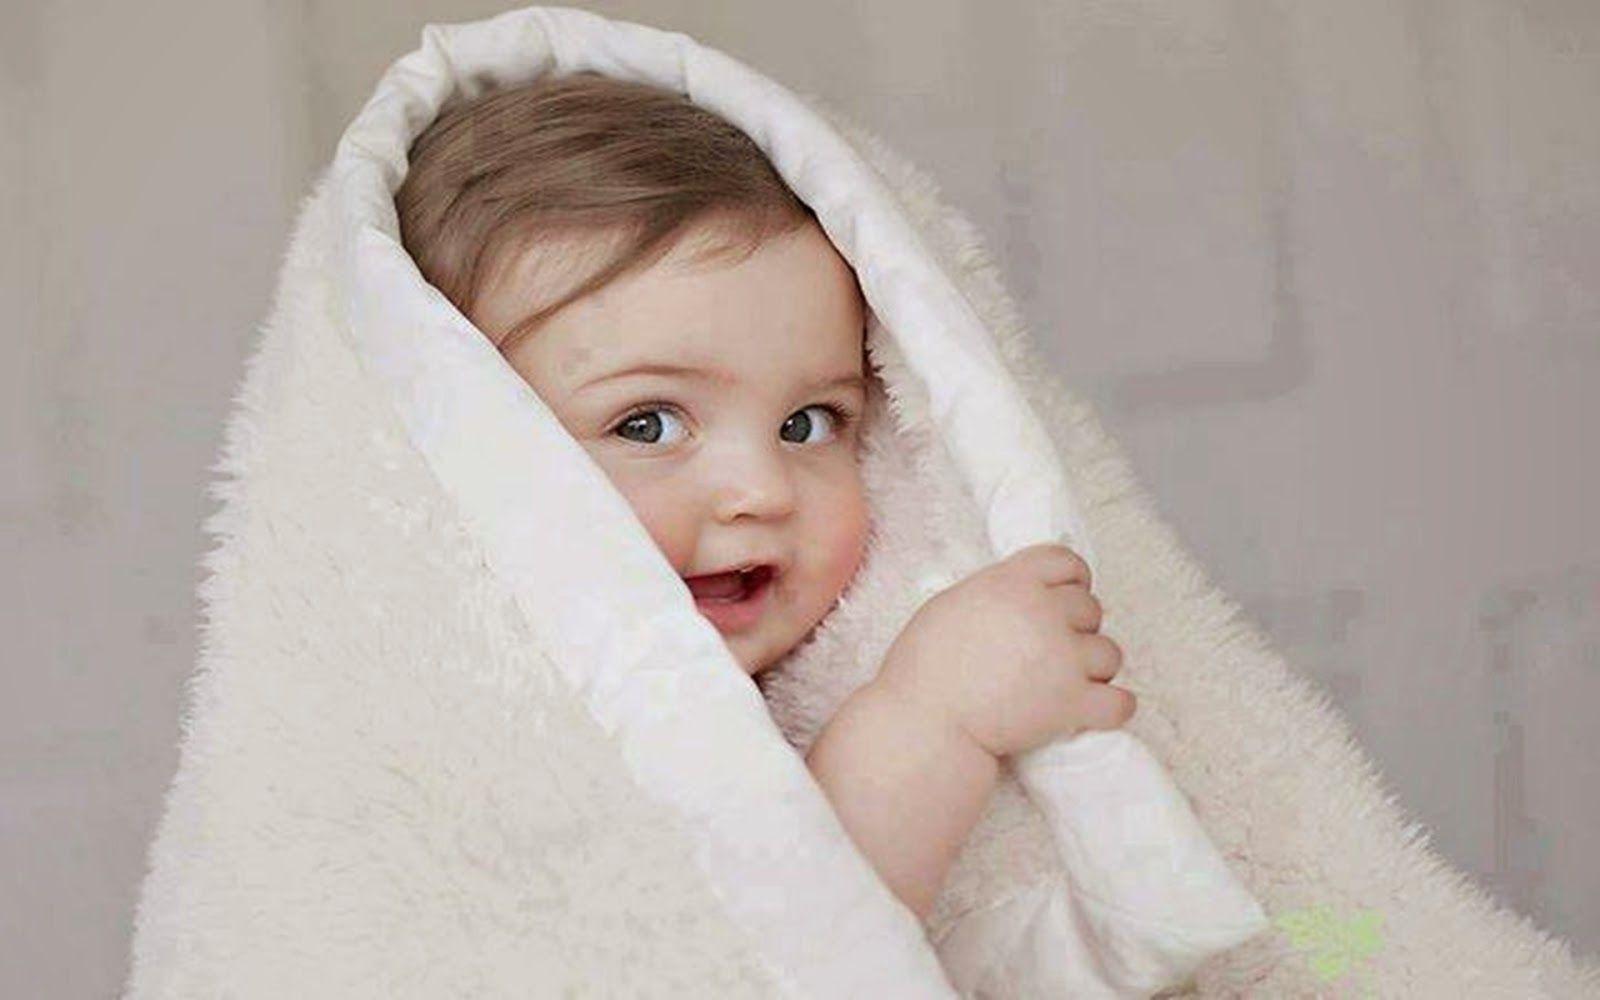 Mphoto Cover: Cute Baby Girl Wallpaper For Facebook Profile